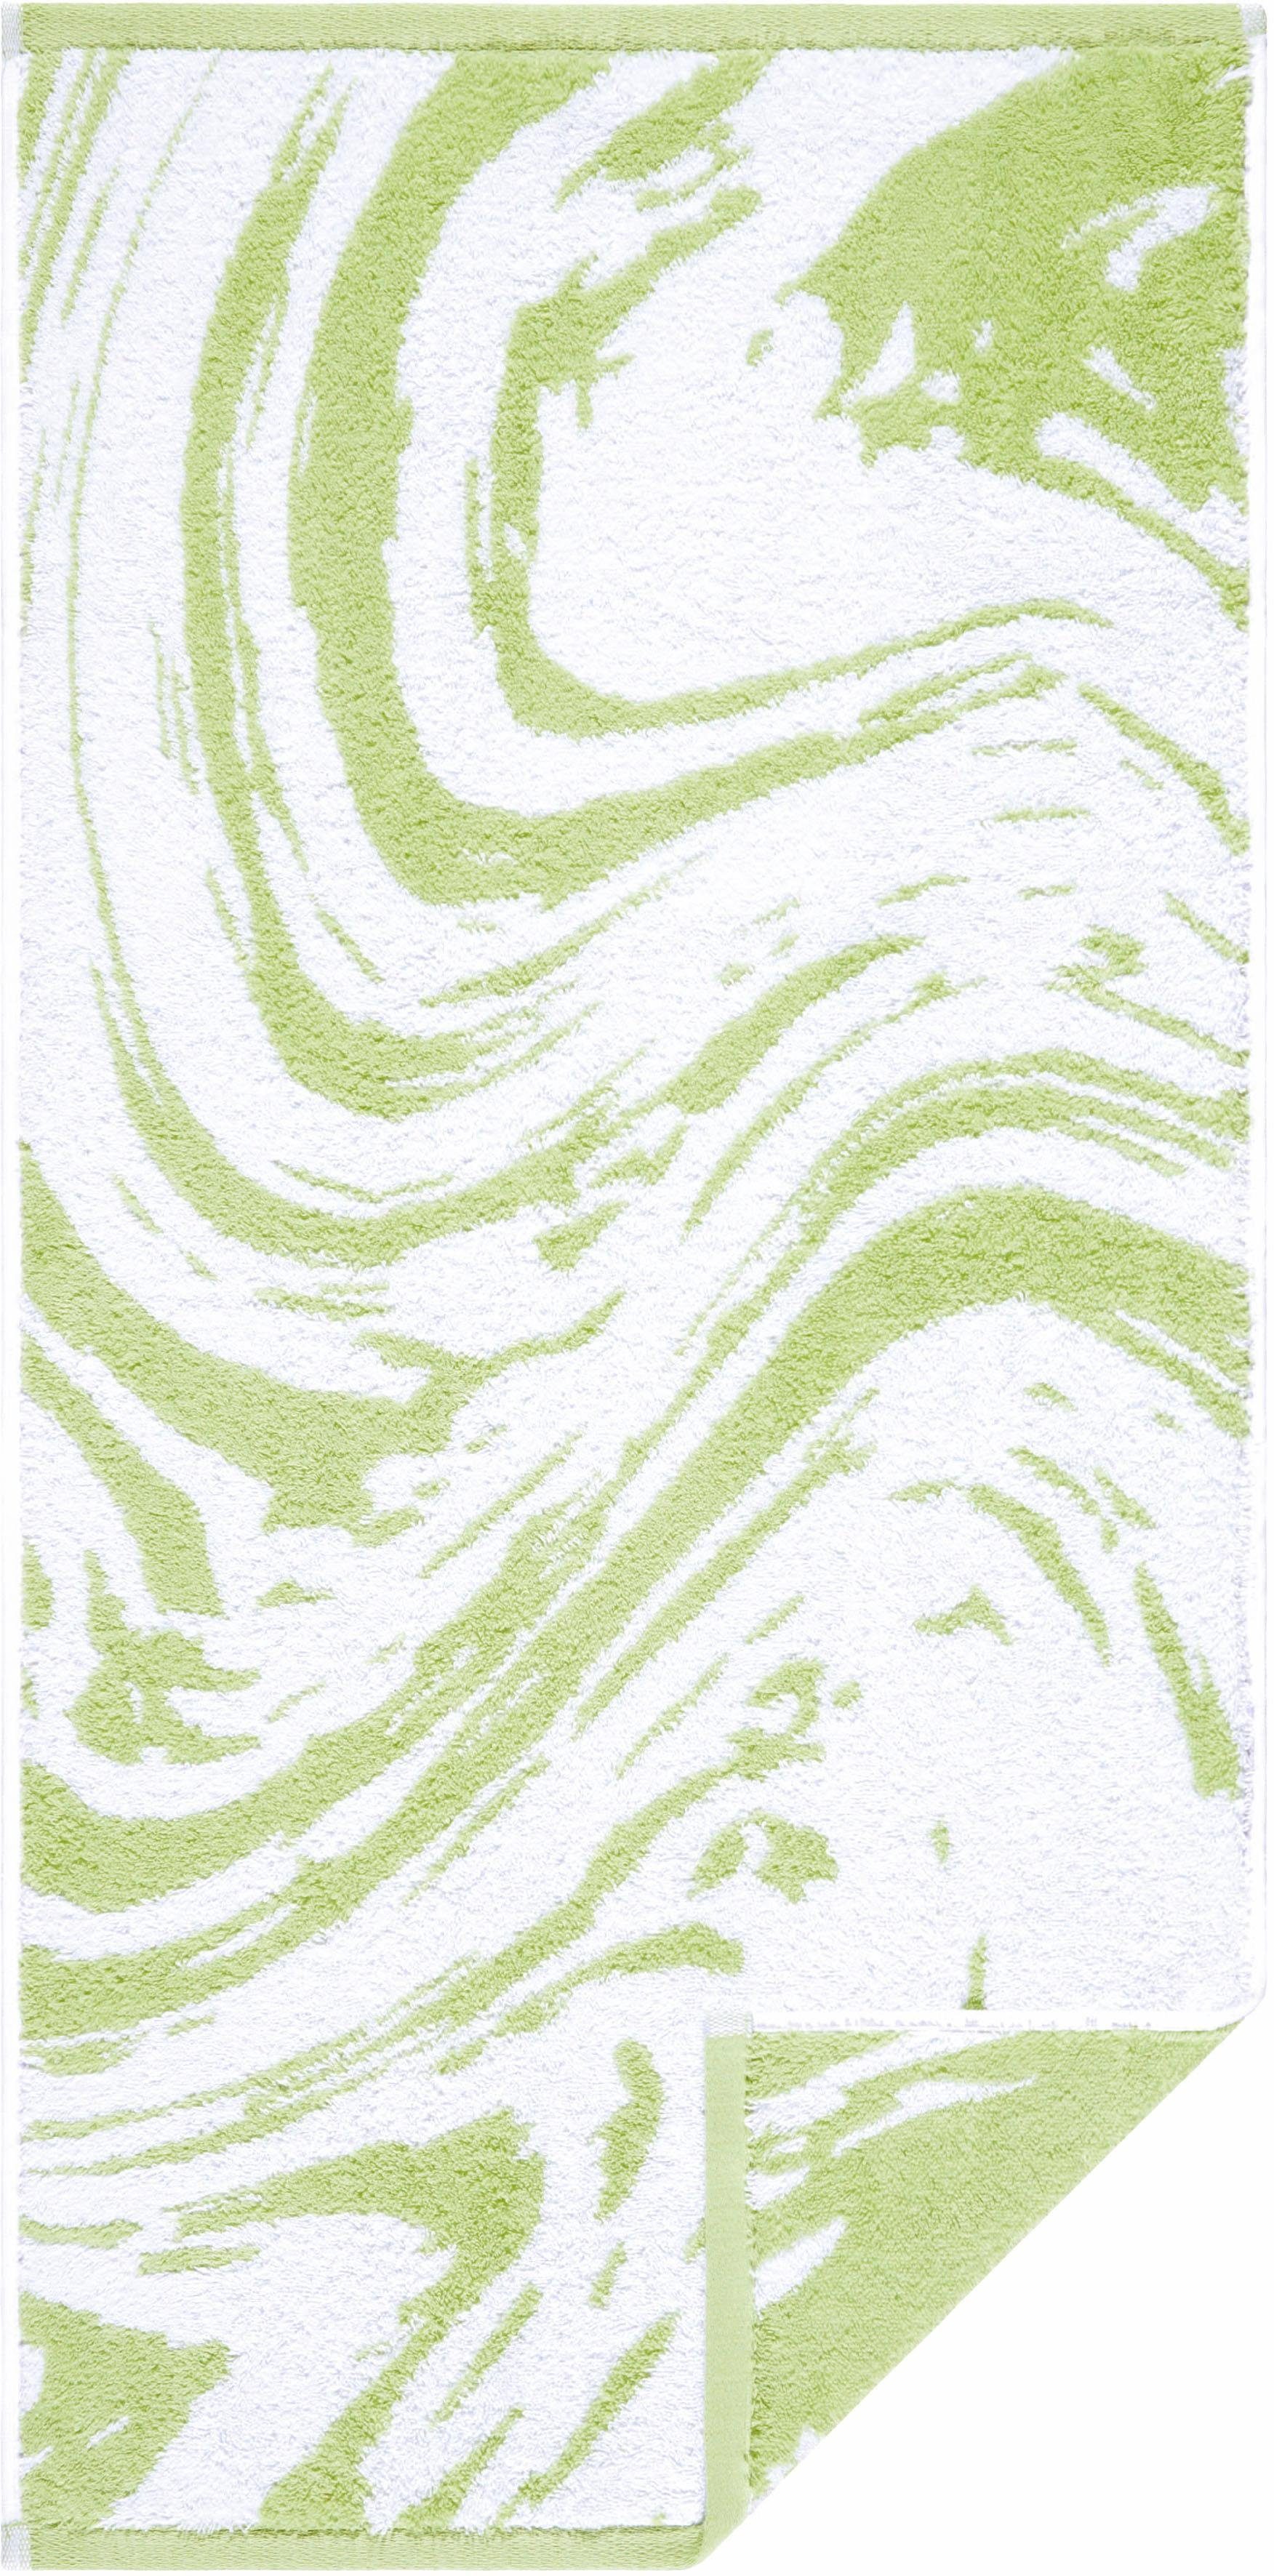 Egeria Handdoek Marble met patroon (2 stuks)